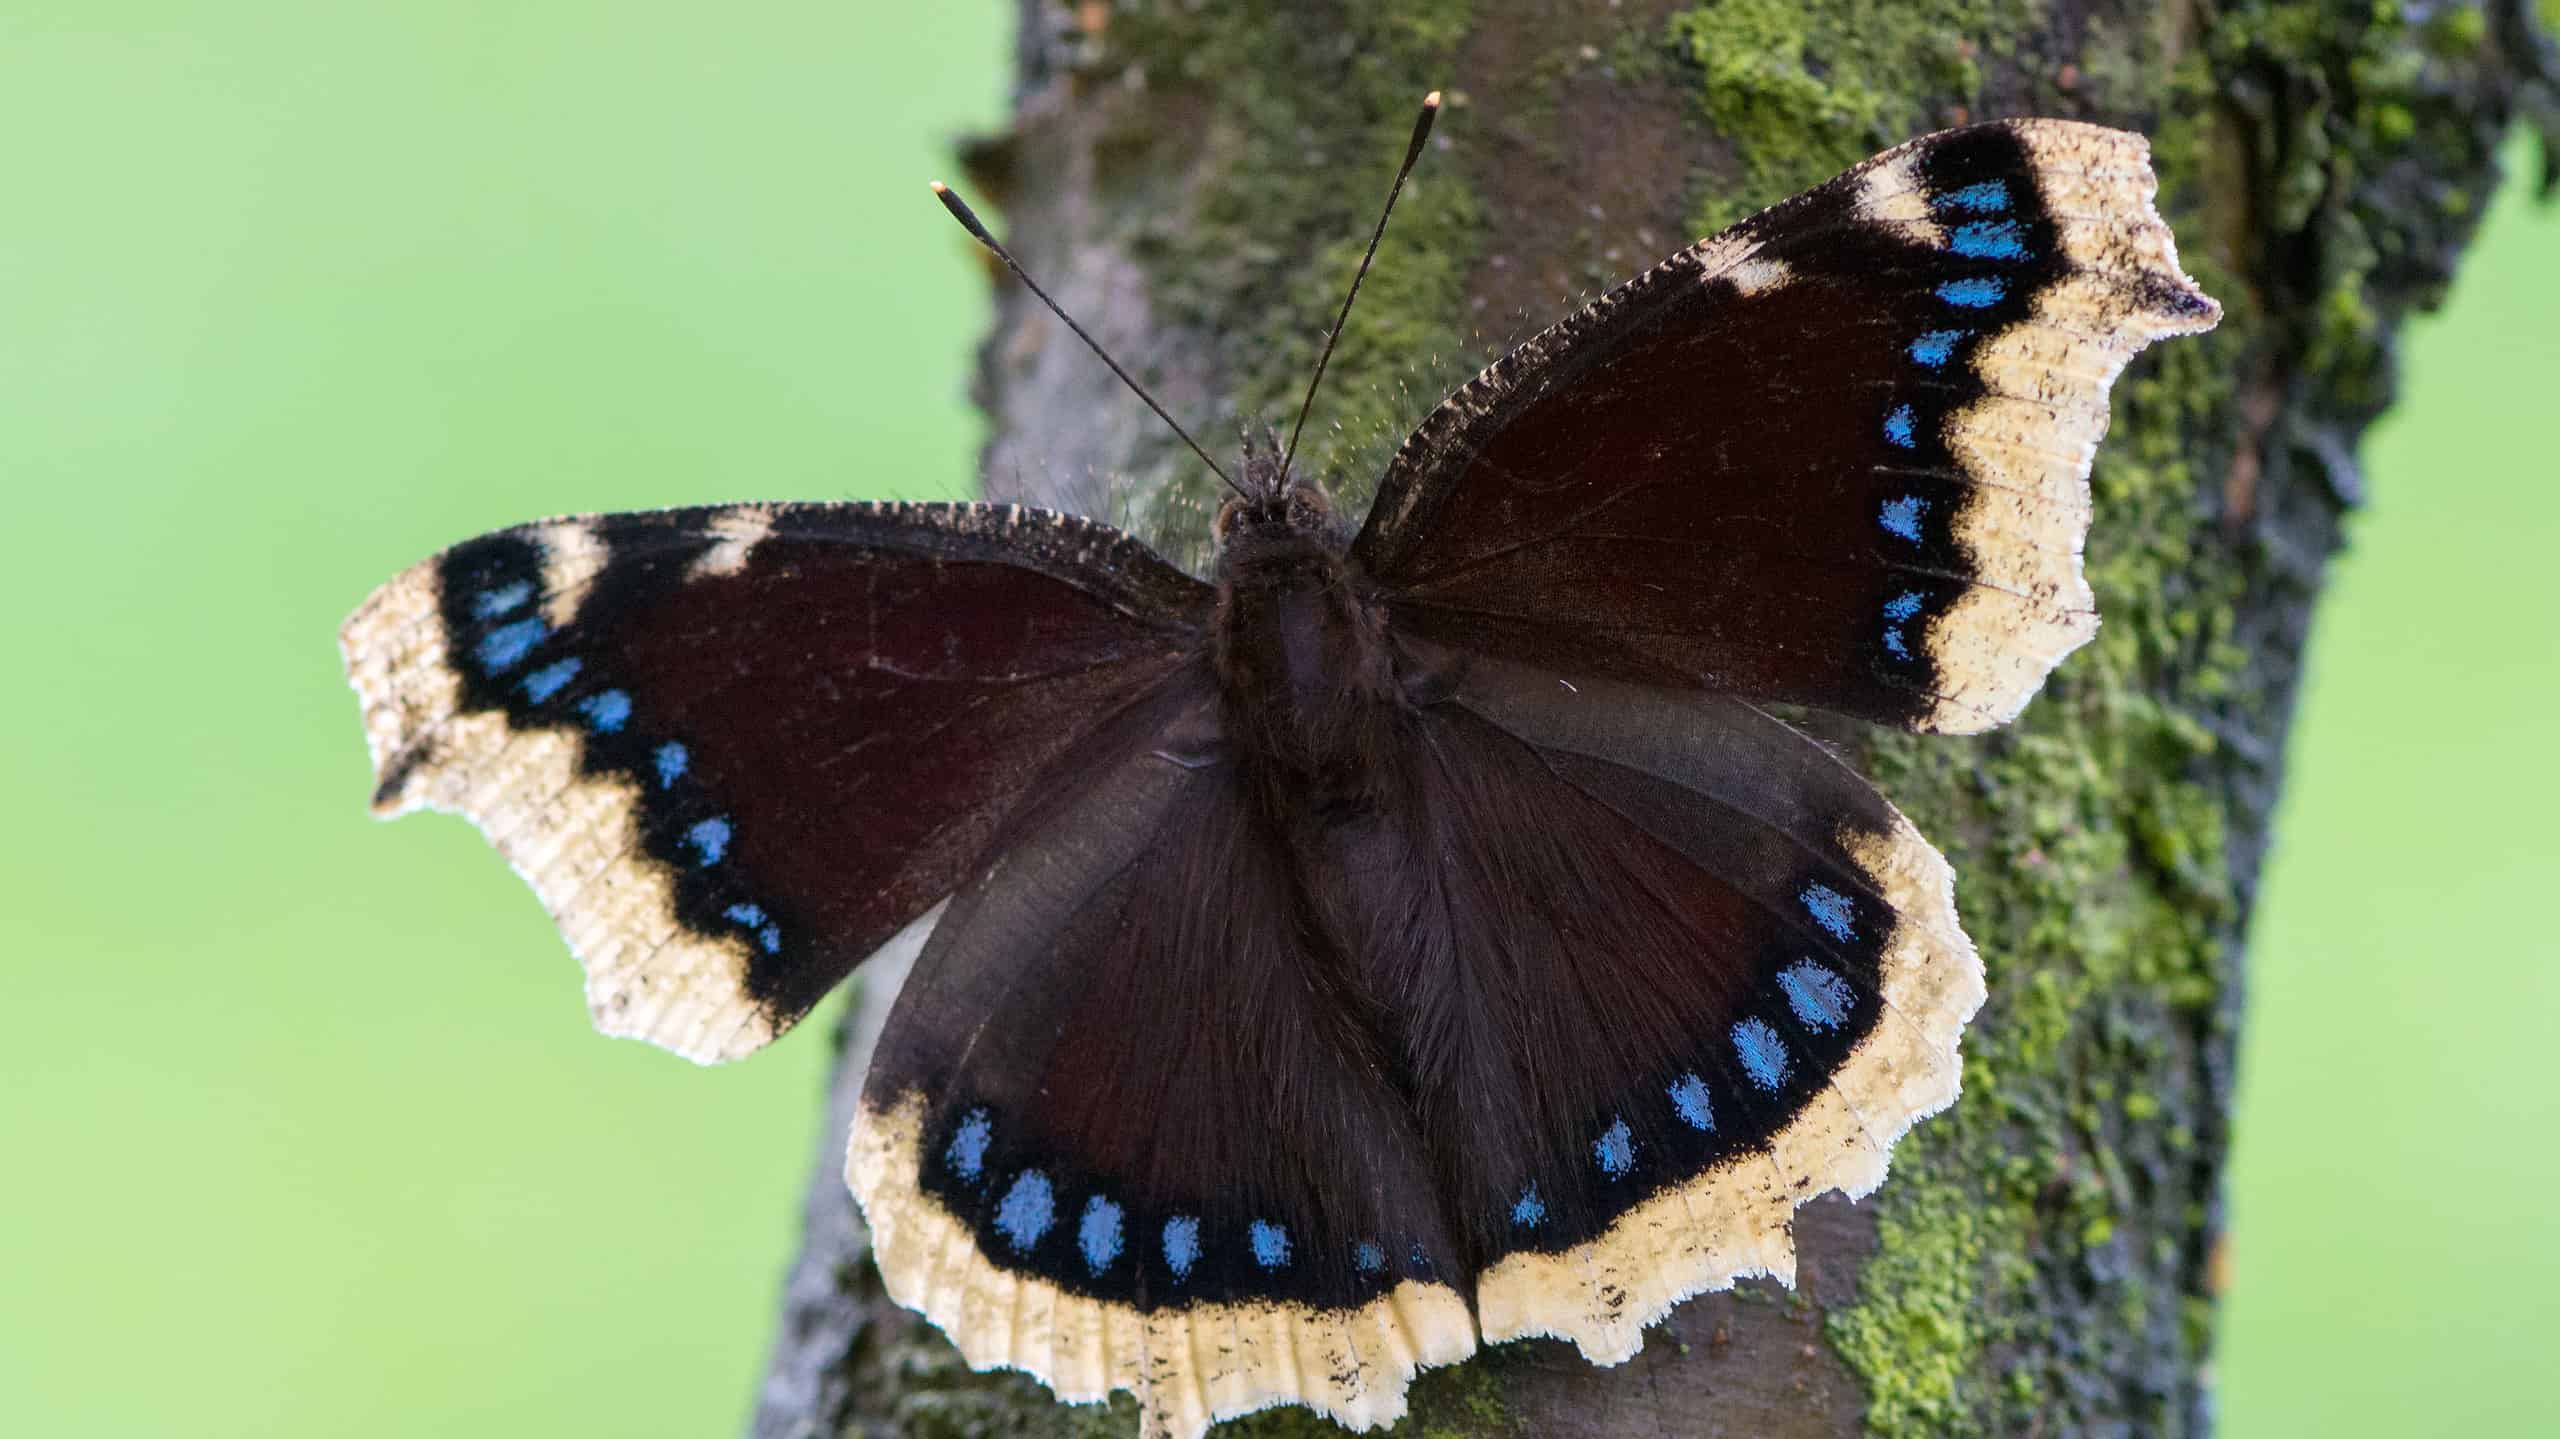 Mourning cloak butterfly on tree bark